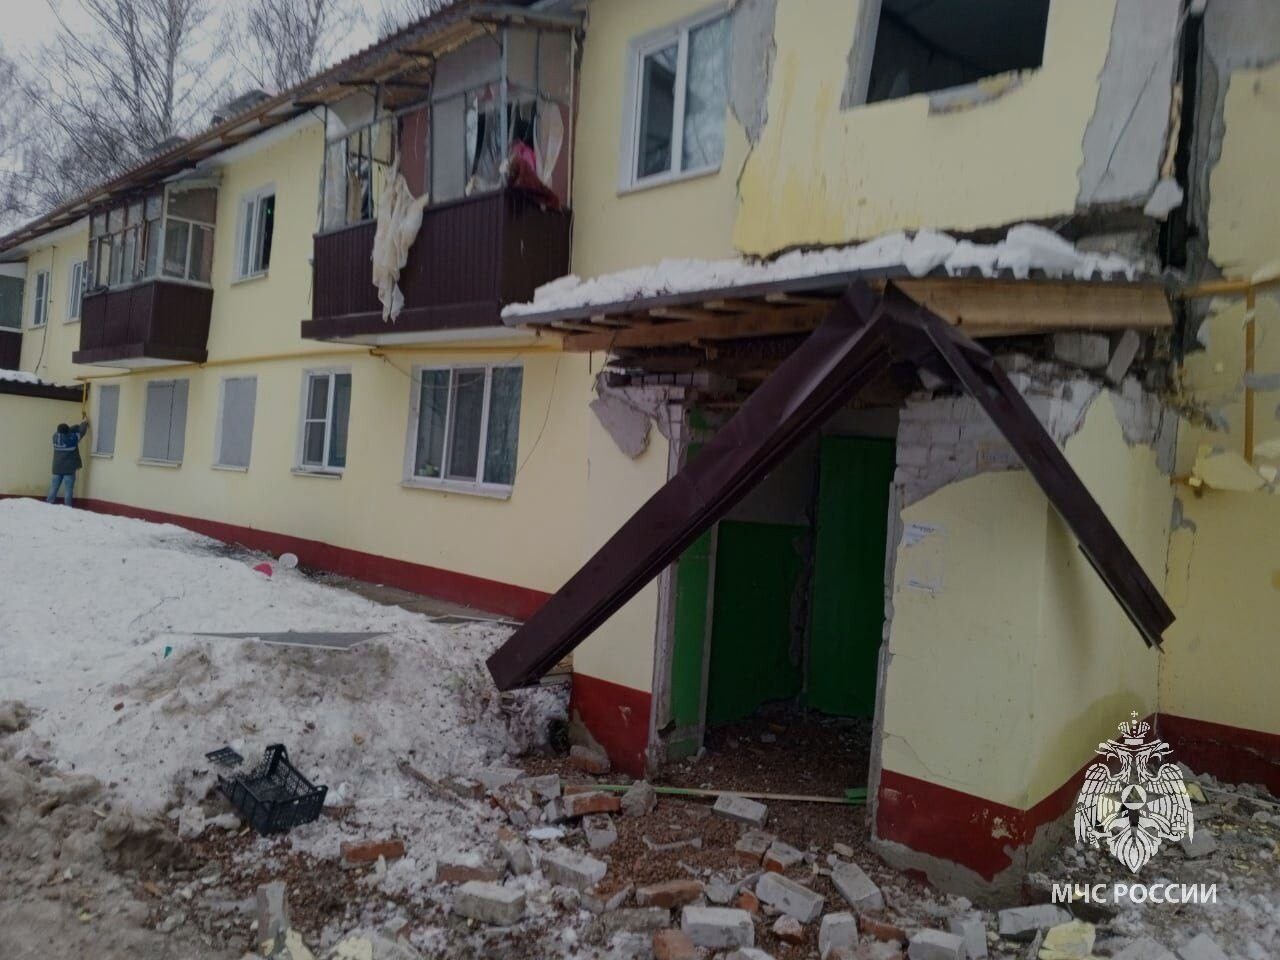 Квартира в Екатеринбурге взорвалась из-за самогонного аппарата